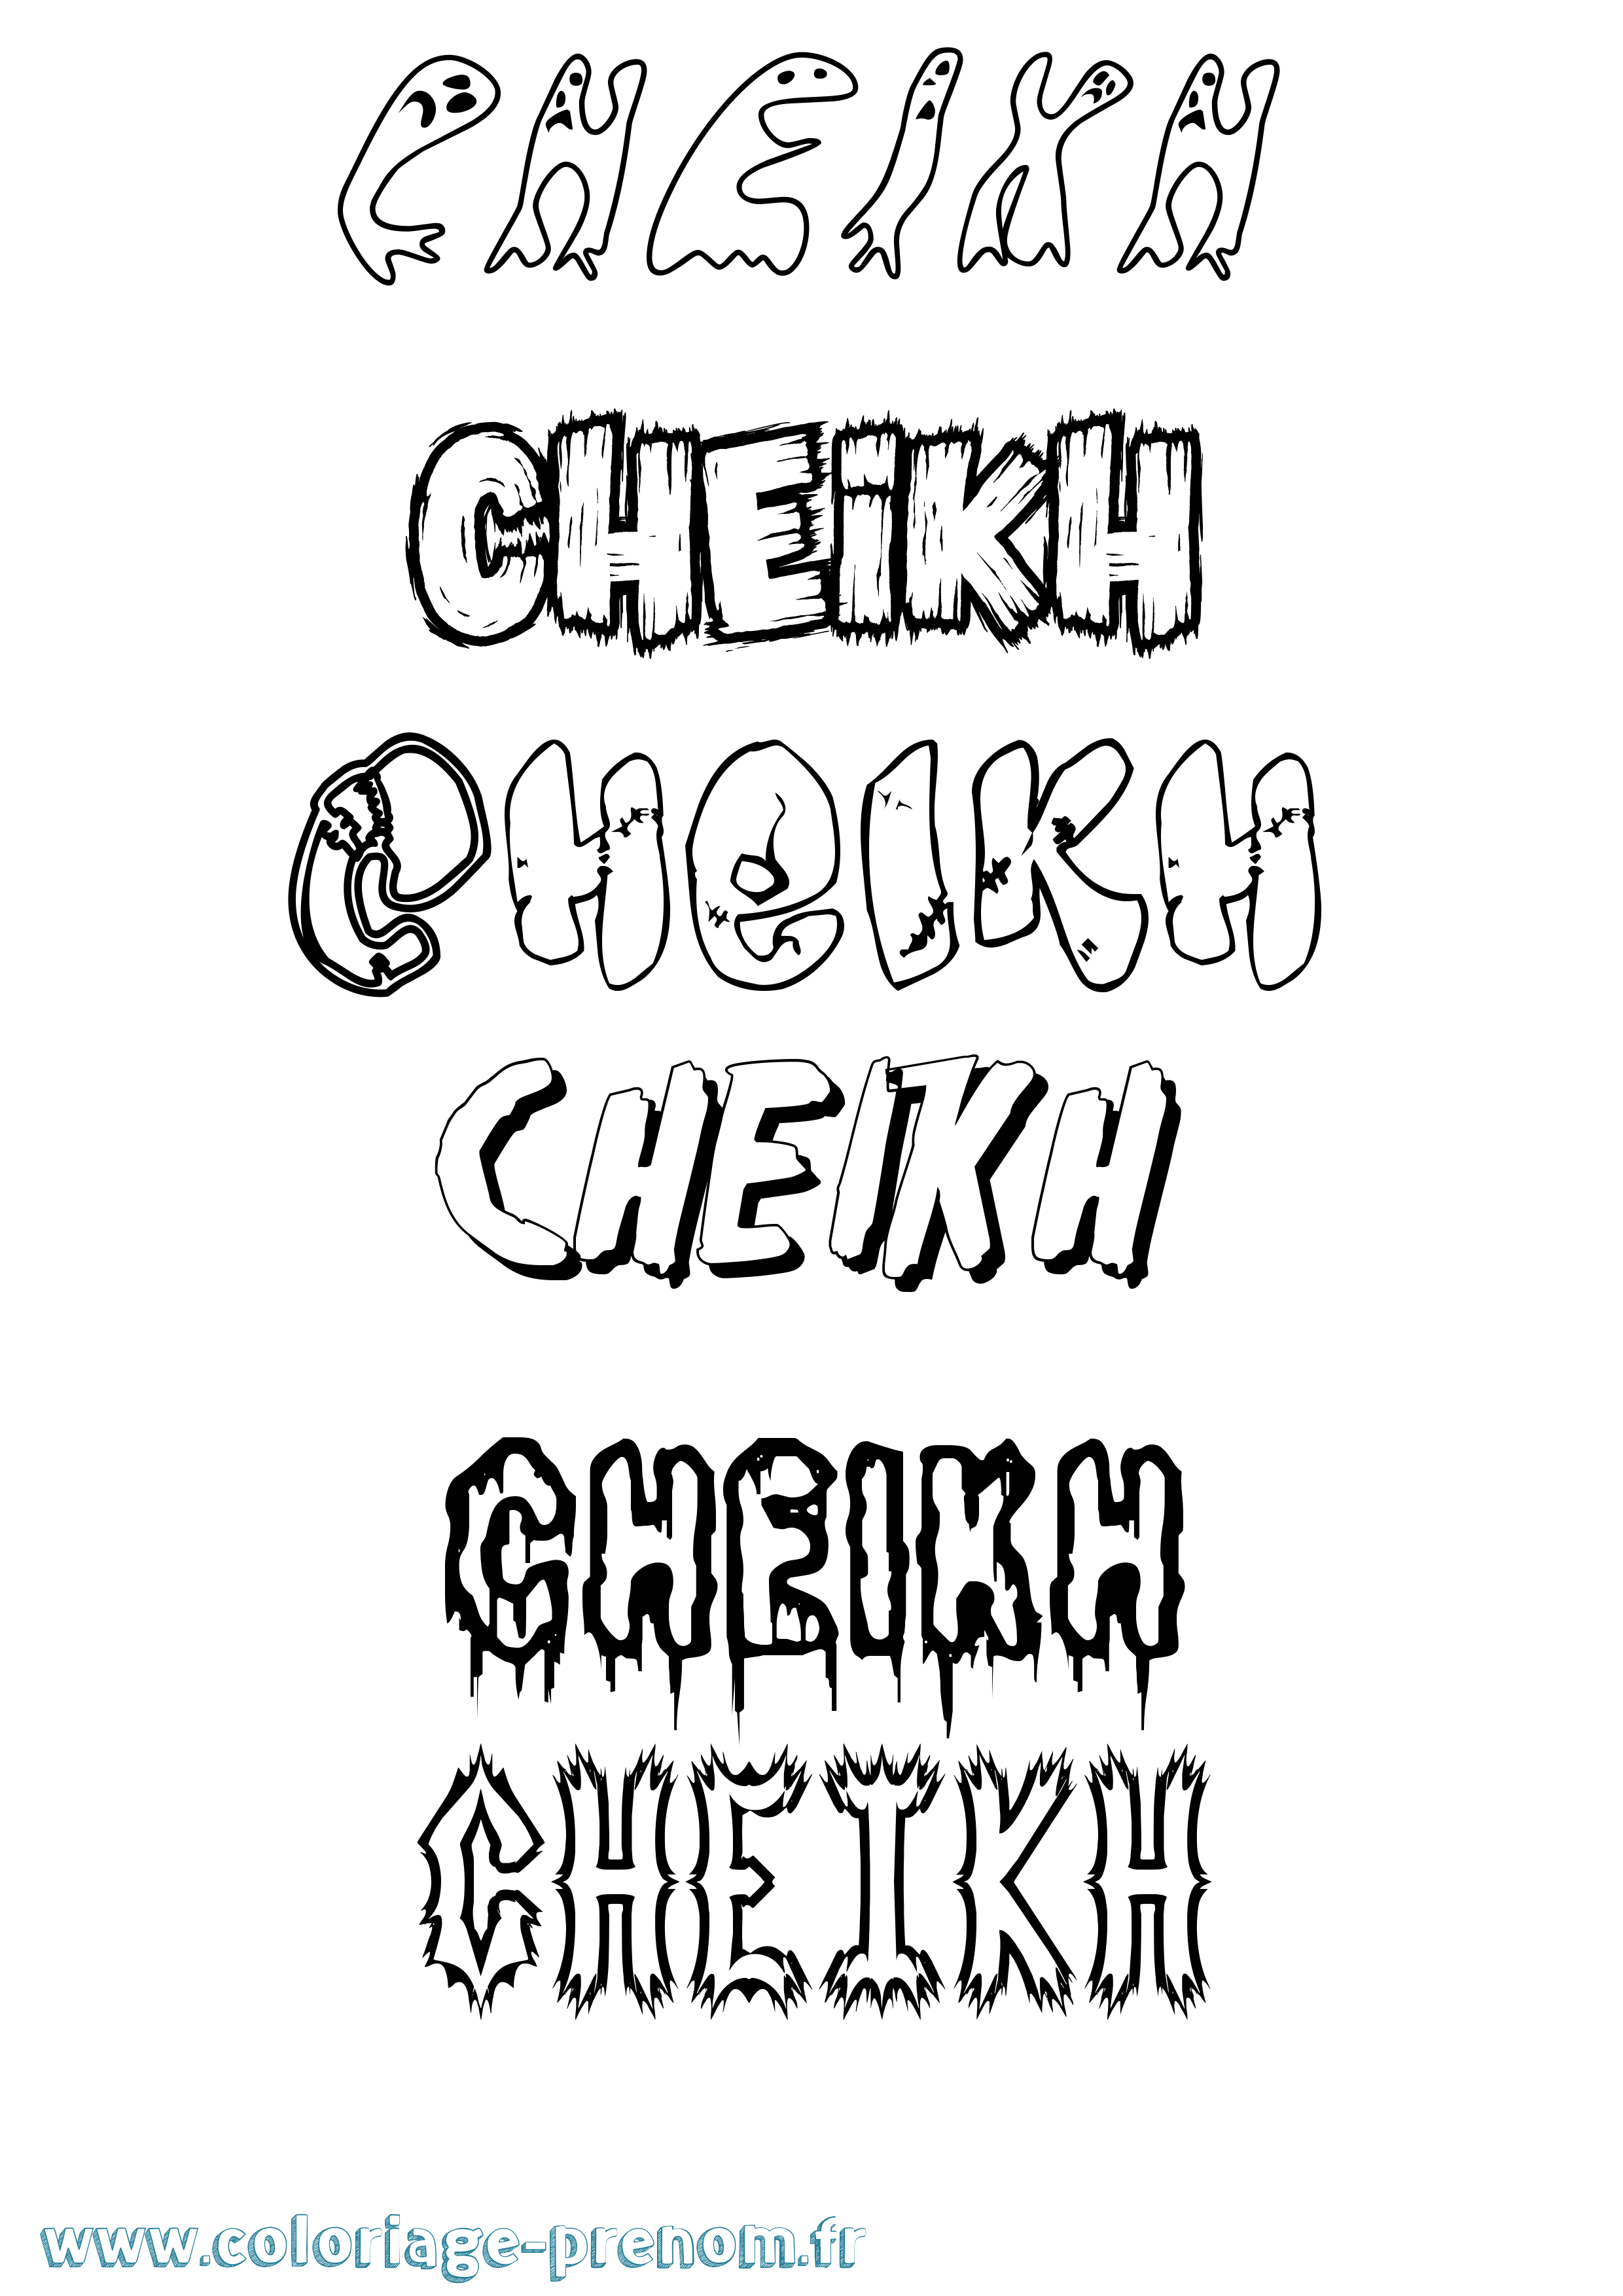 Coloriage prénom Cheikh